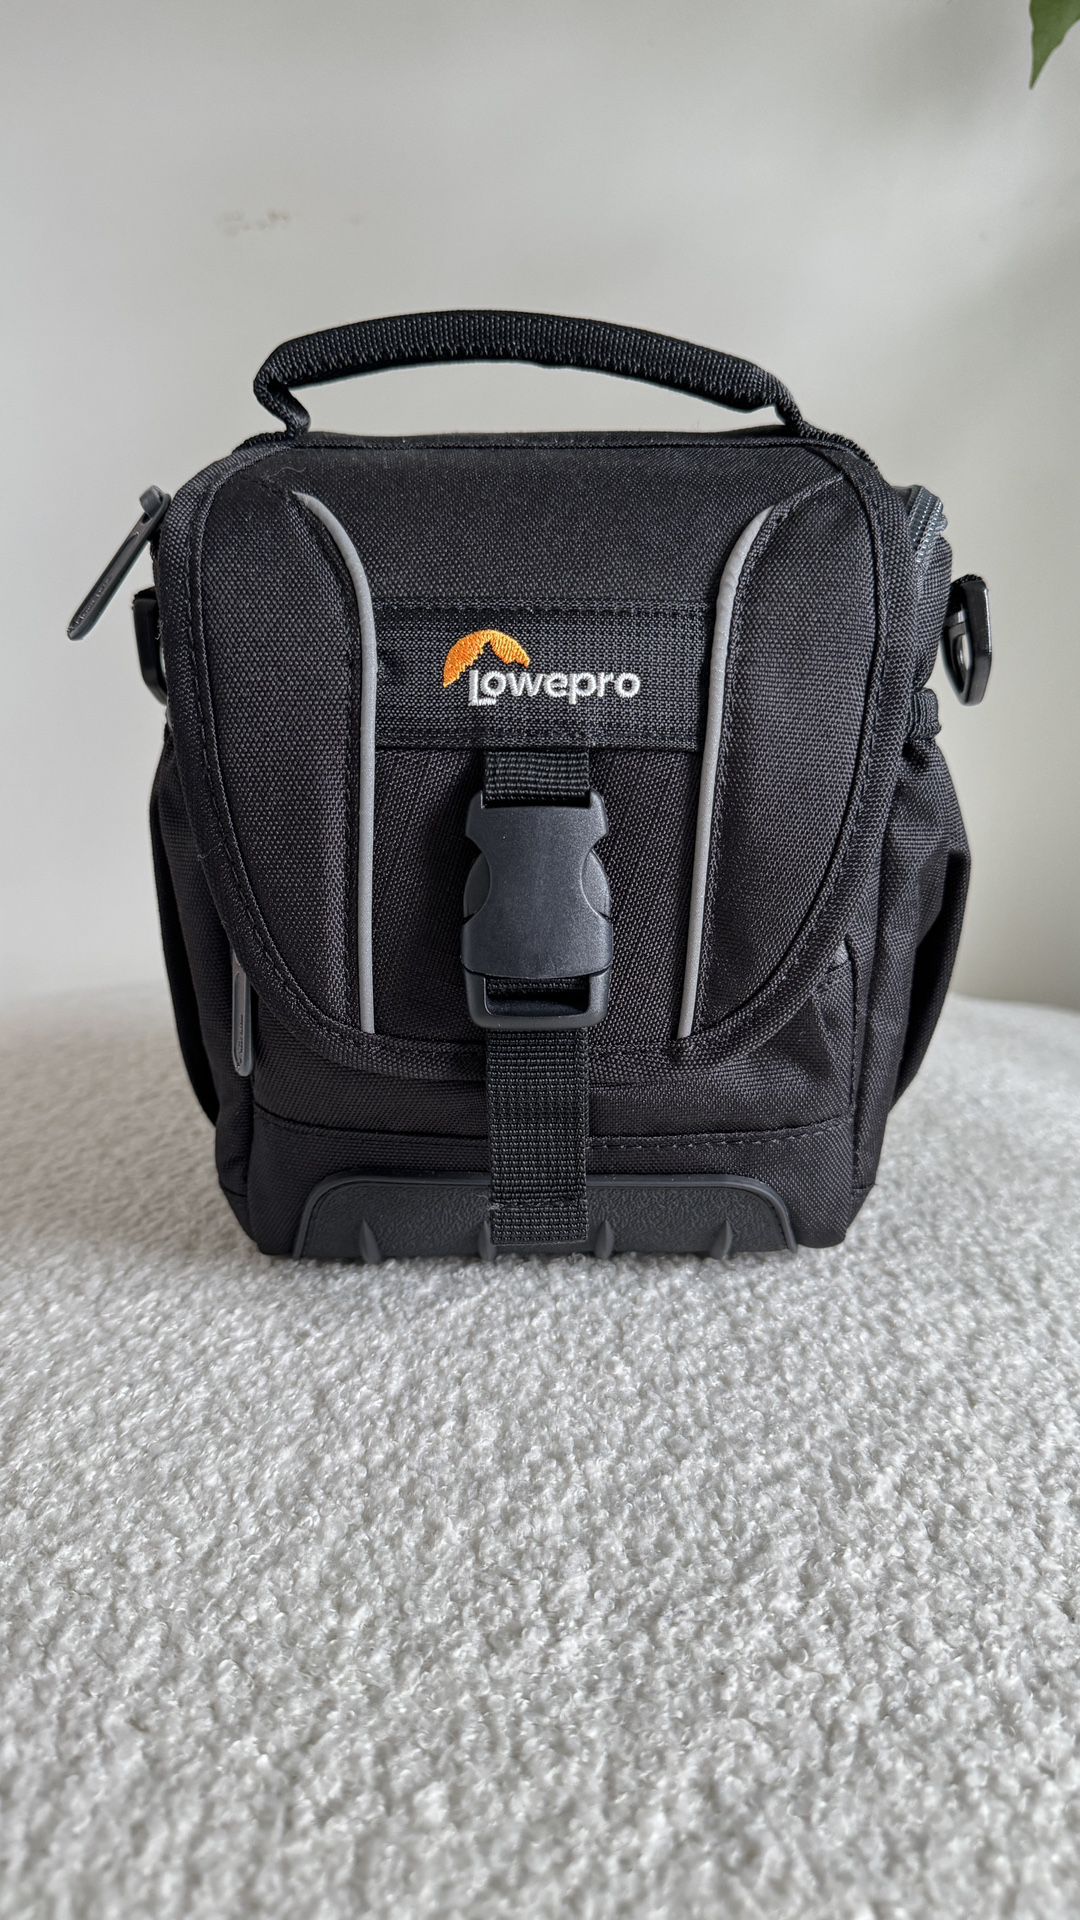 Lowepro Adventura Camera Bag